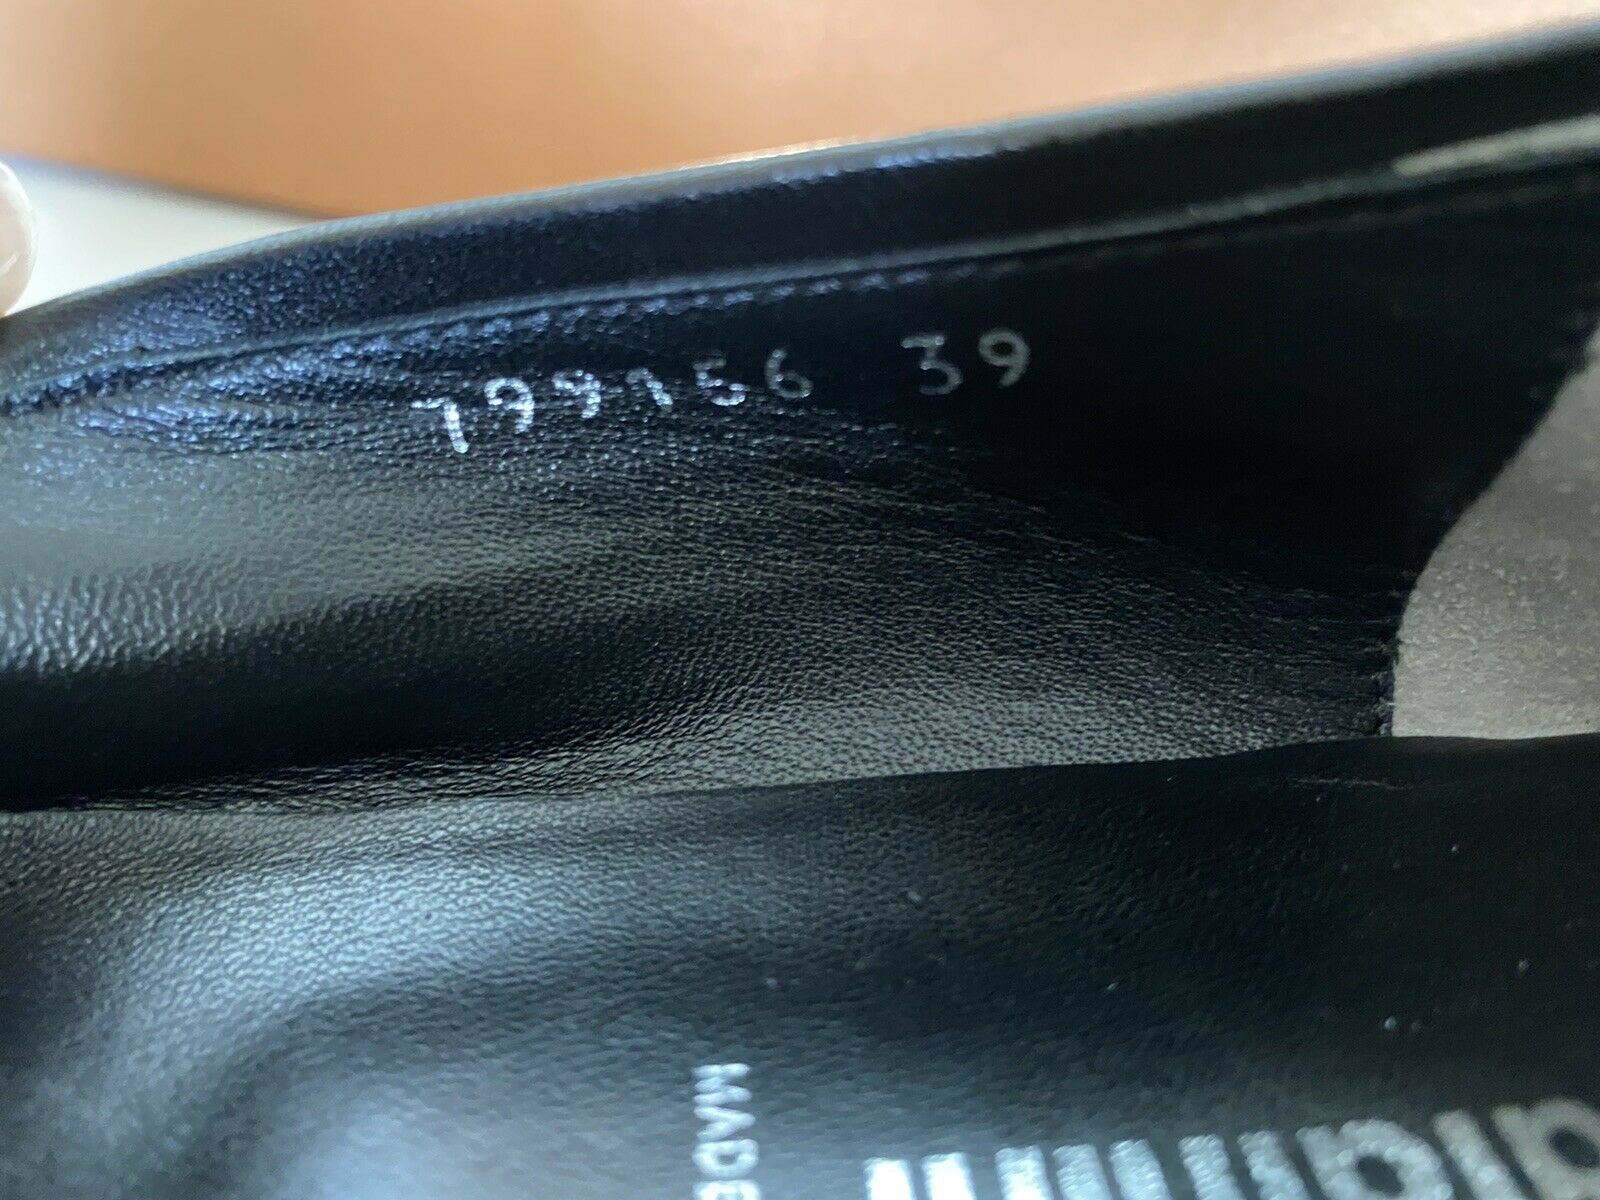 Baldinini Women’s Espadrilles Black Leather  39 Eu Made in Italy 799156